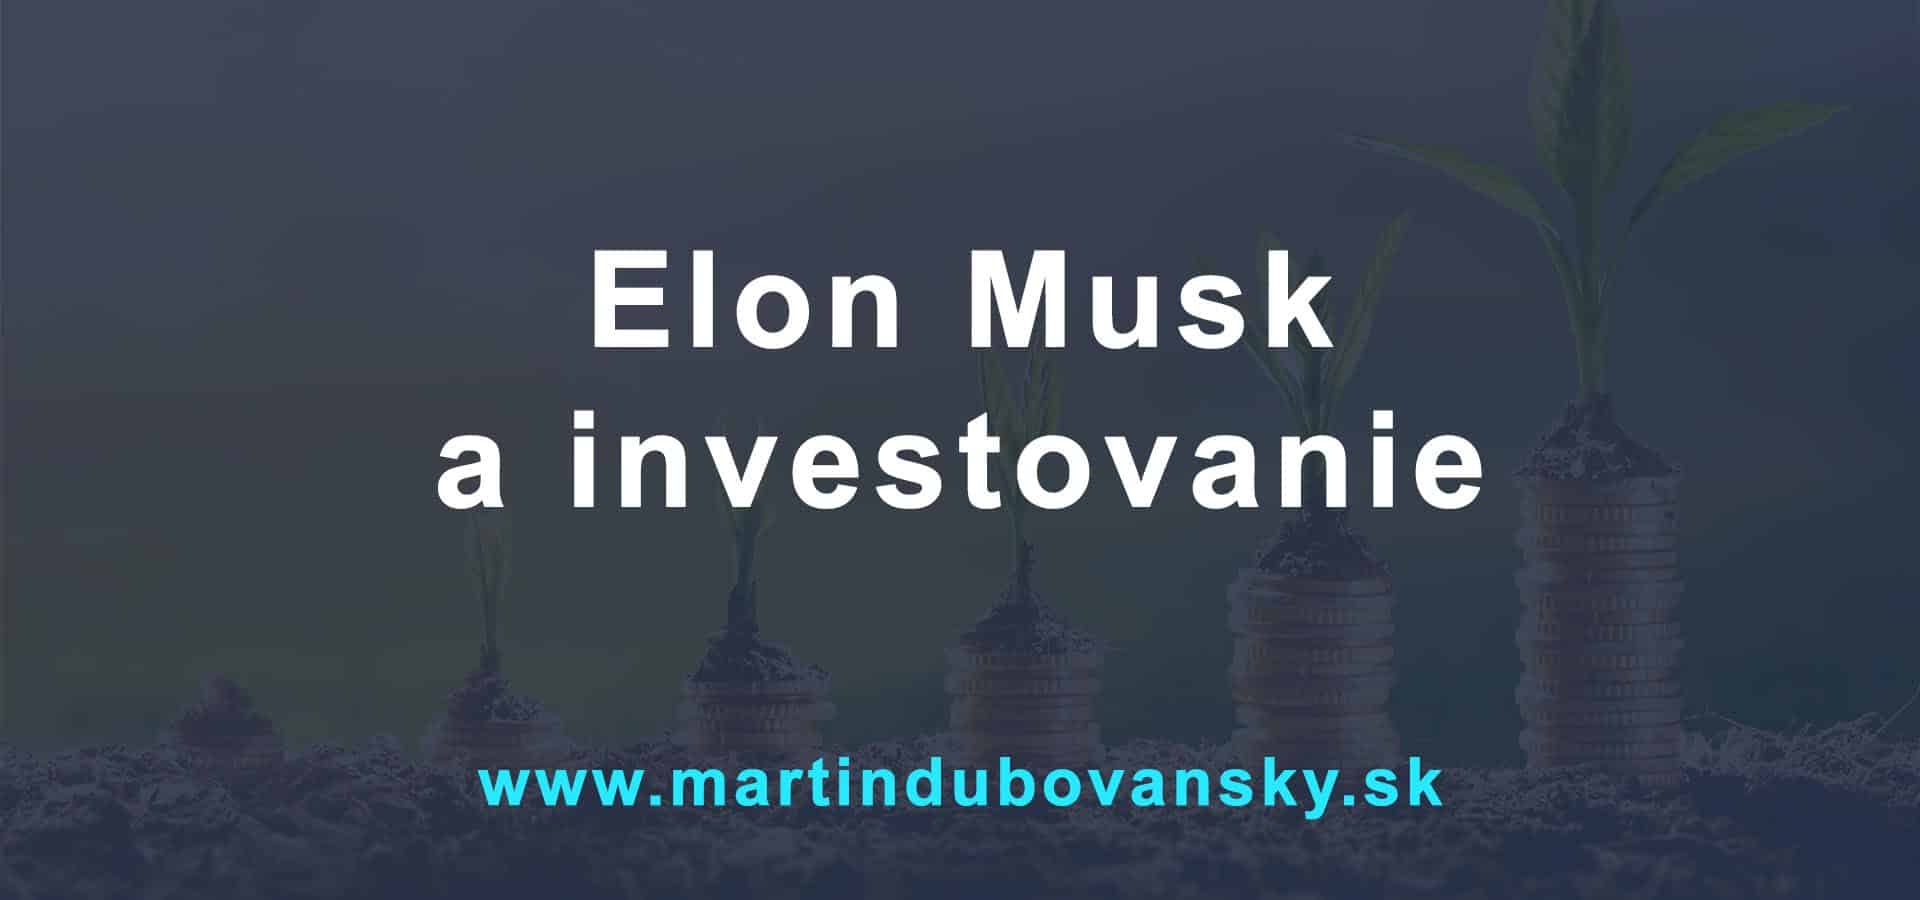 Elon Musk a investovanie